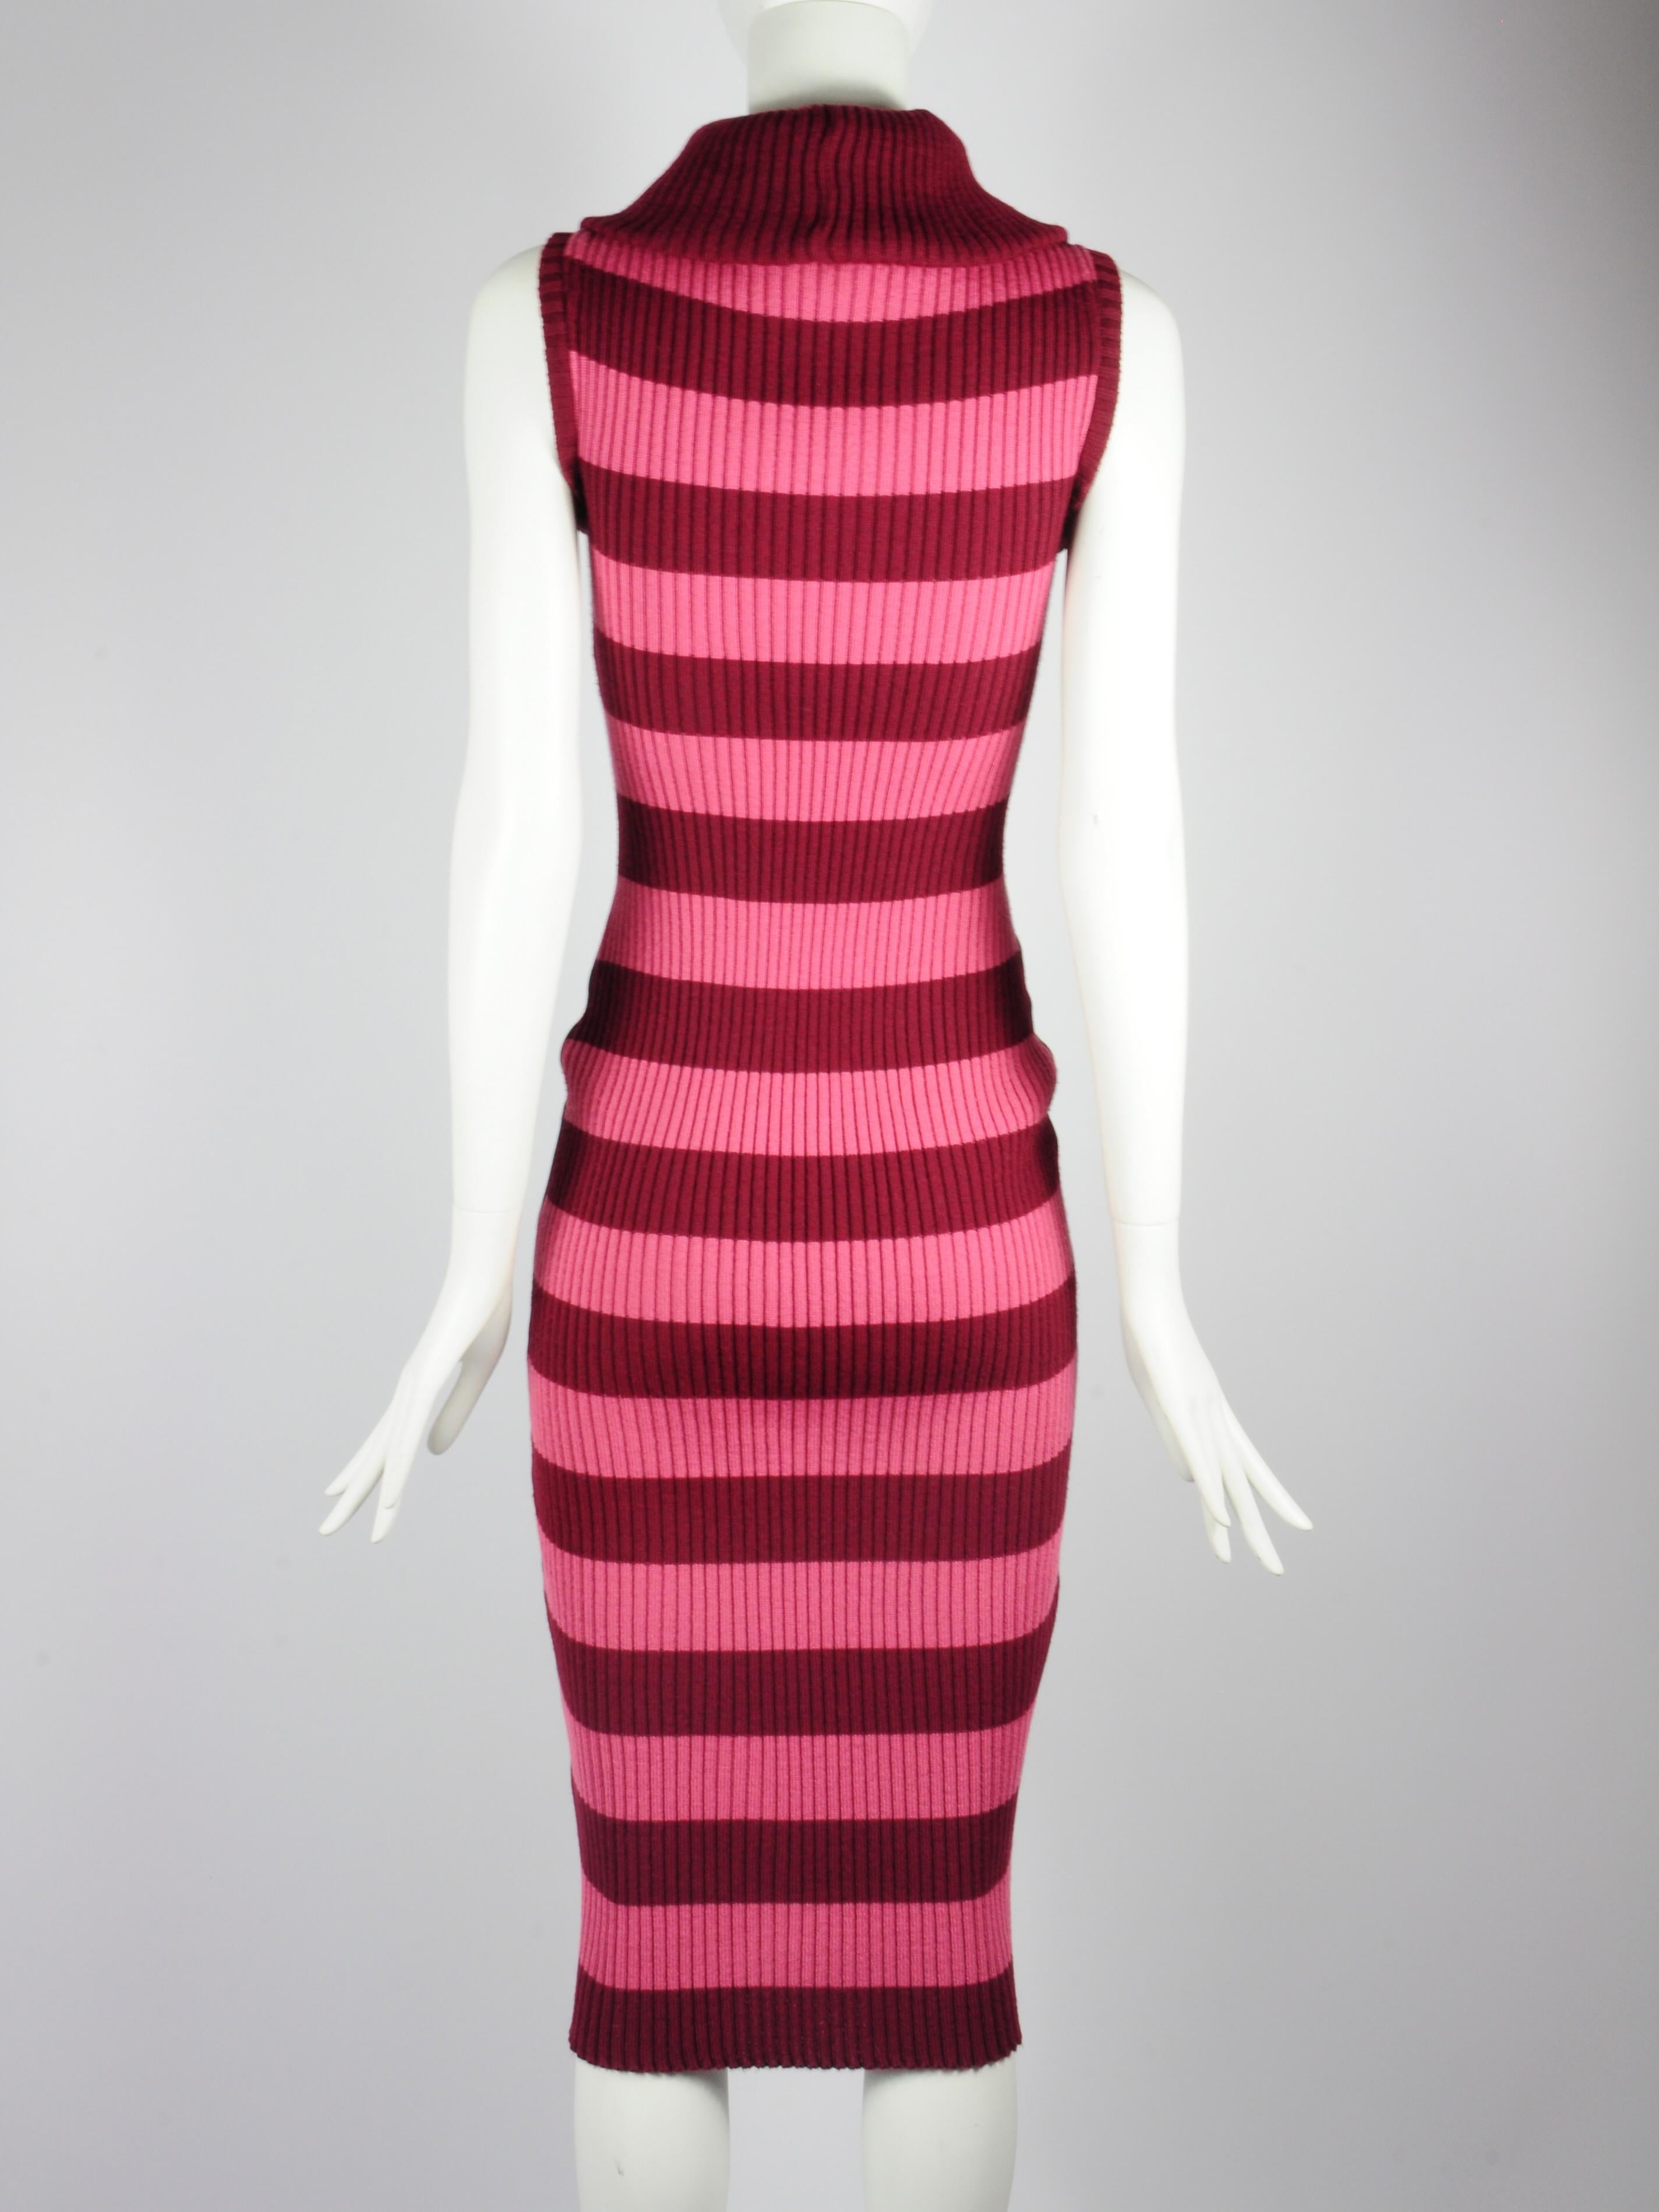 D&G Dolce & Gabbana Denim and Knitwear Dress Striped Turtleneck Sleeveless 1990s For Sale 10